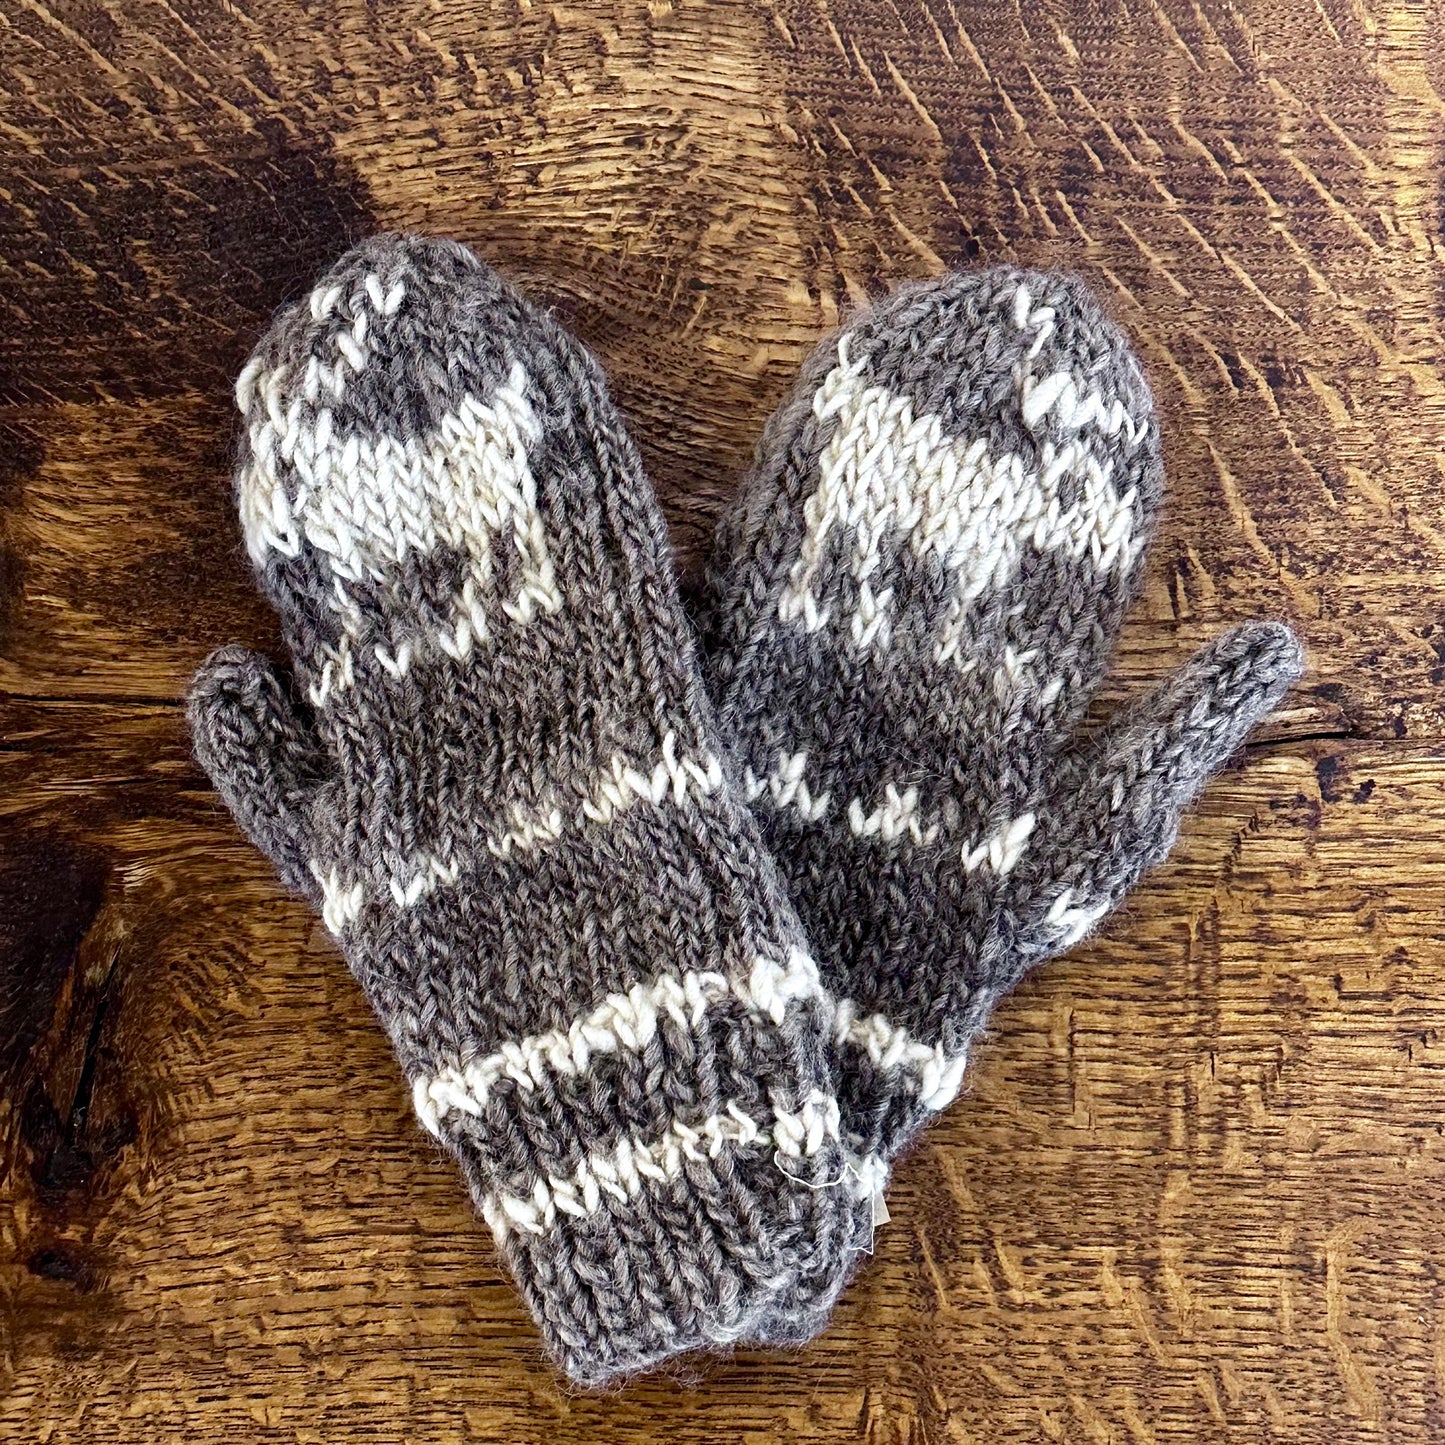 Hand-Knitted Wool Mittens w/Animals